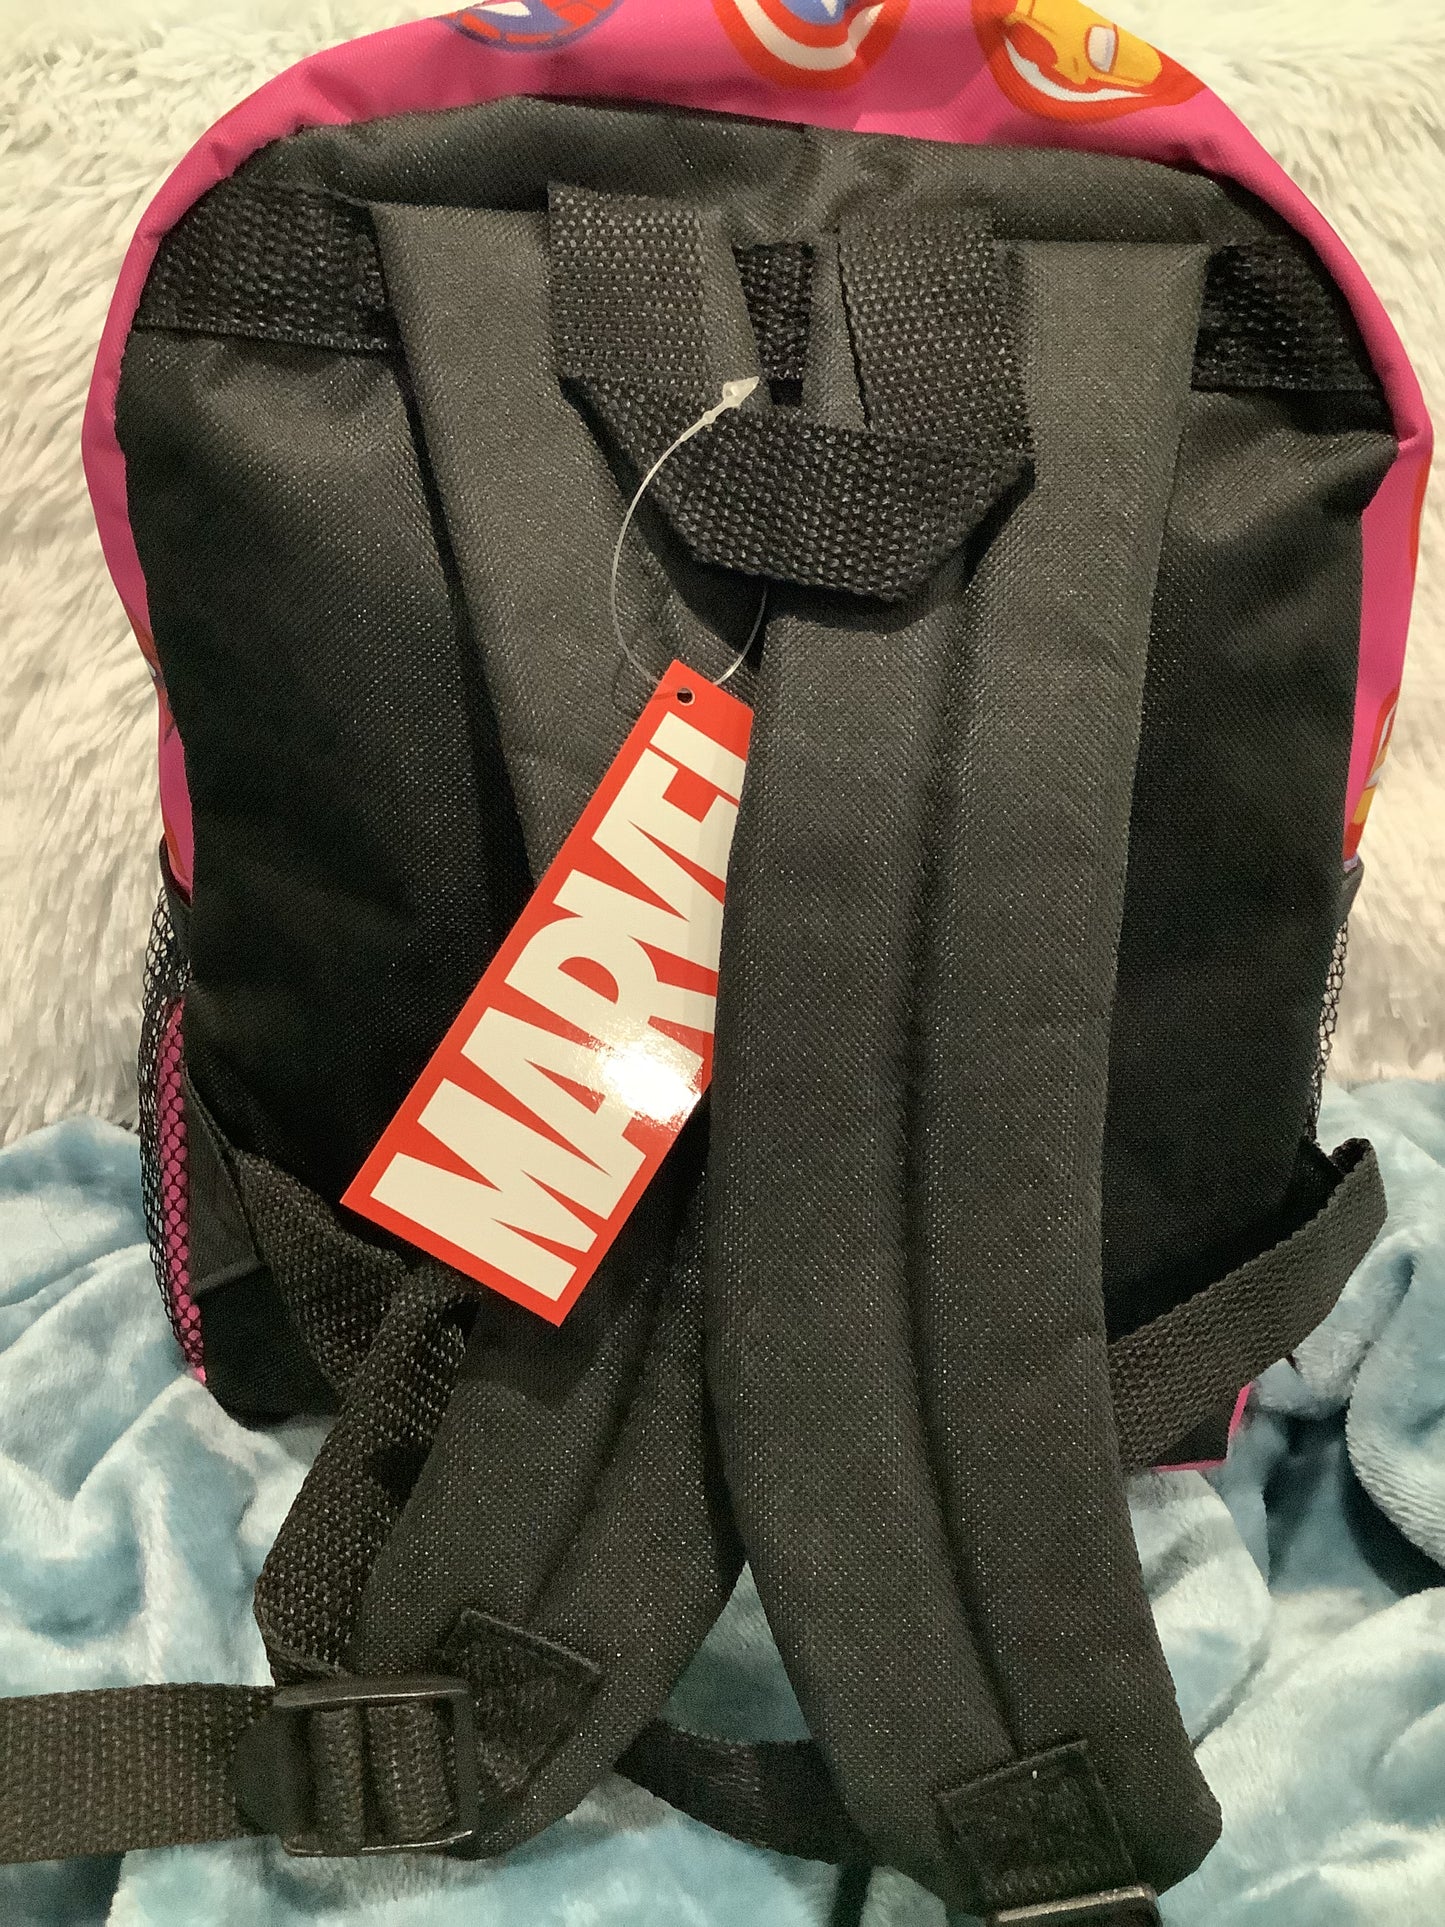 Pink Marvel Mini Backpack